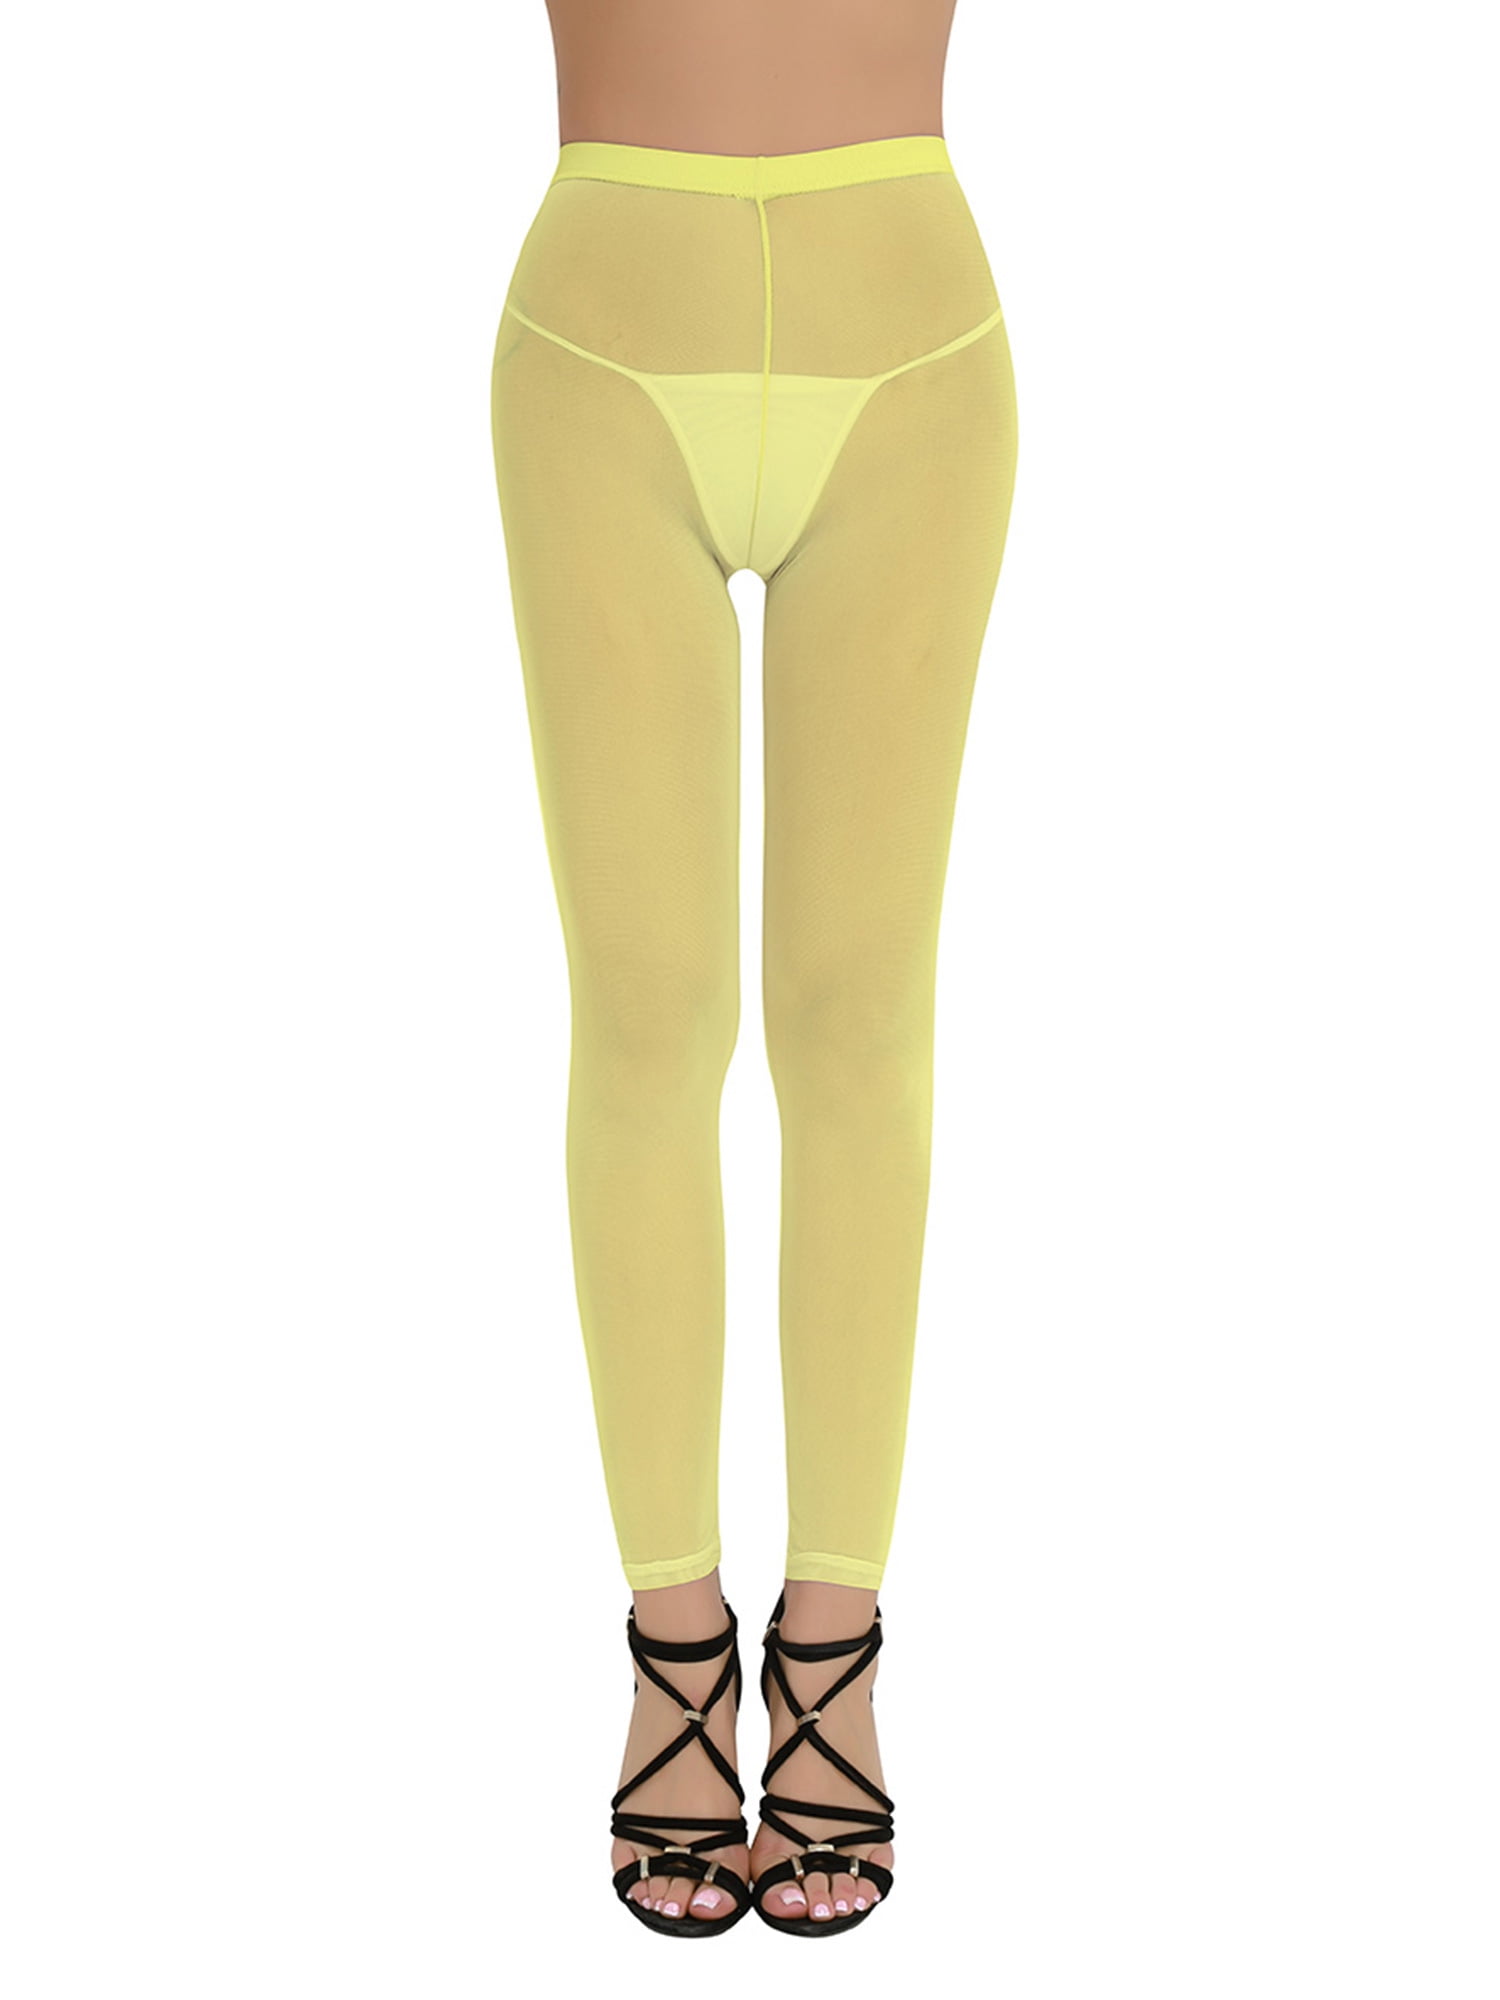 YIWEI Womens Silky See Through Leggings High Elastic Sheer Ultra-Thin  Skinny Trousers Yellow L 